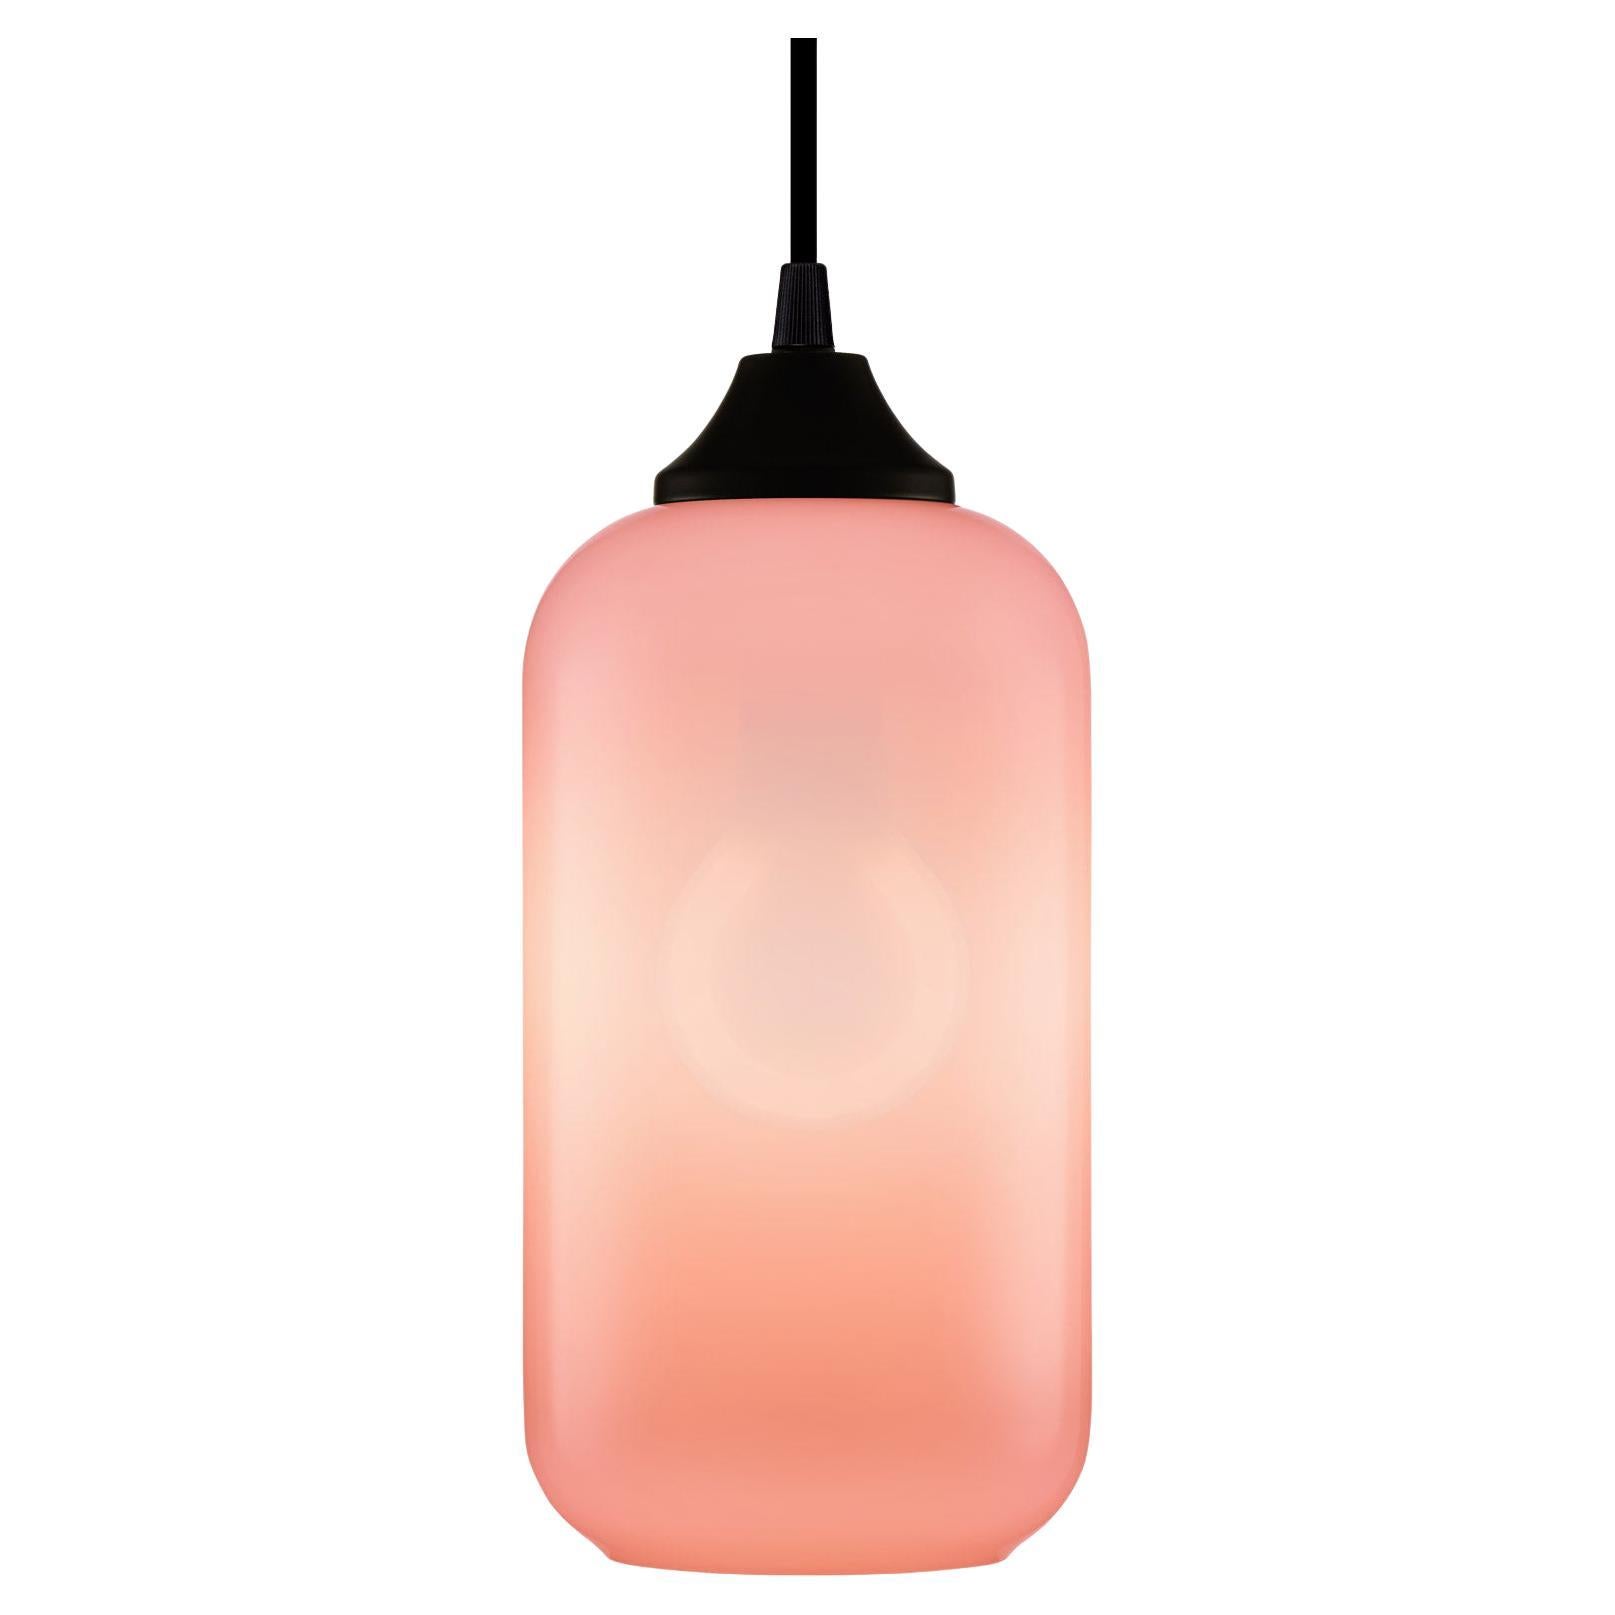 Helio Chroma Flamingo Handblown Modern Glass Pendant Light, Made in the USA